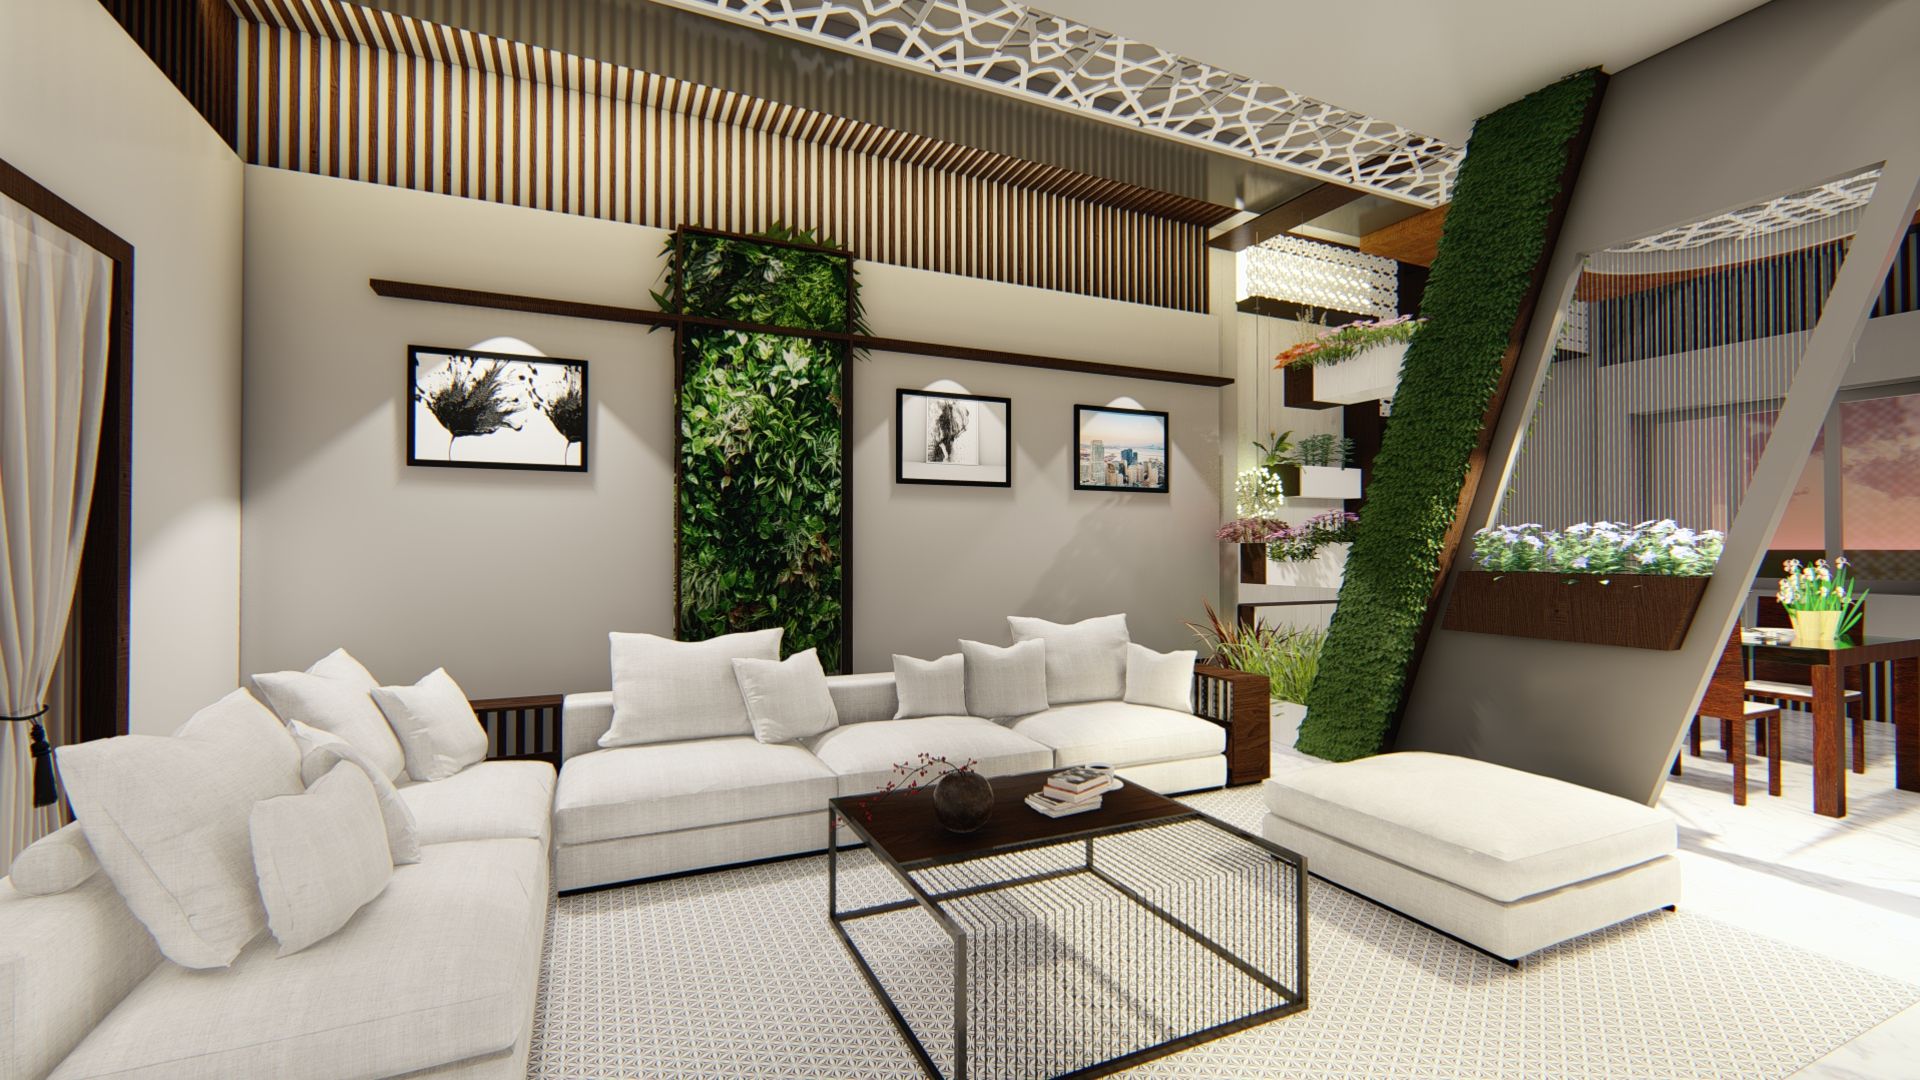 Residential Bungalow Homes for India Modern living room interior design,living room design,green design